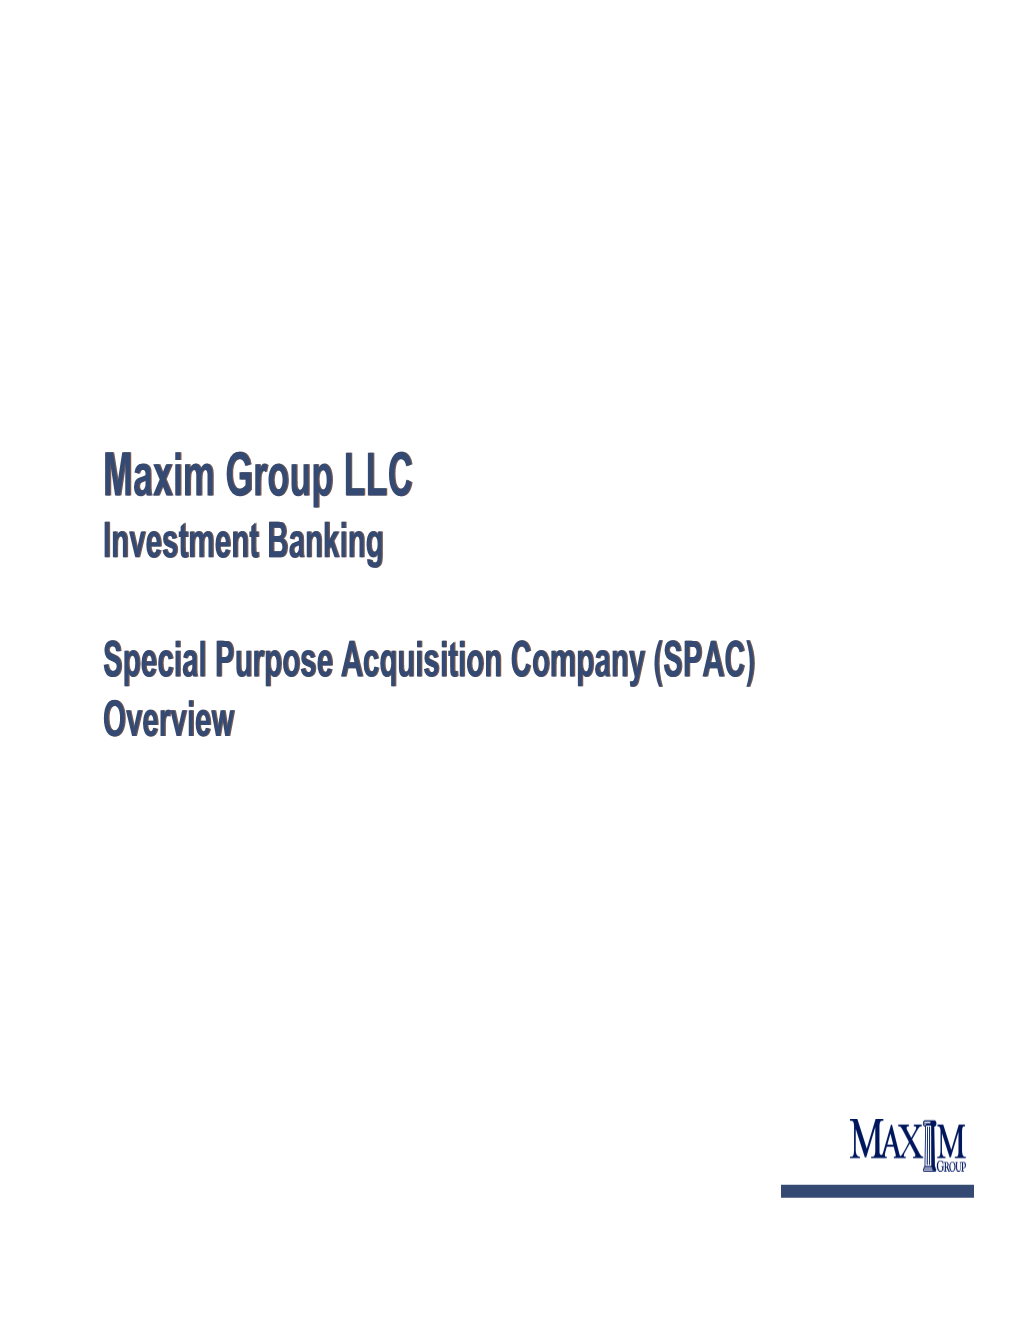 Maxim Group LLC Investment Banking